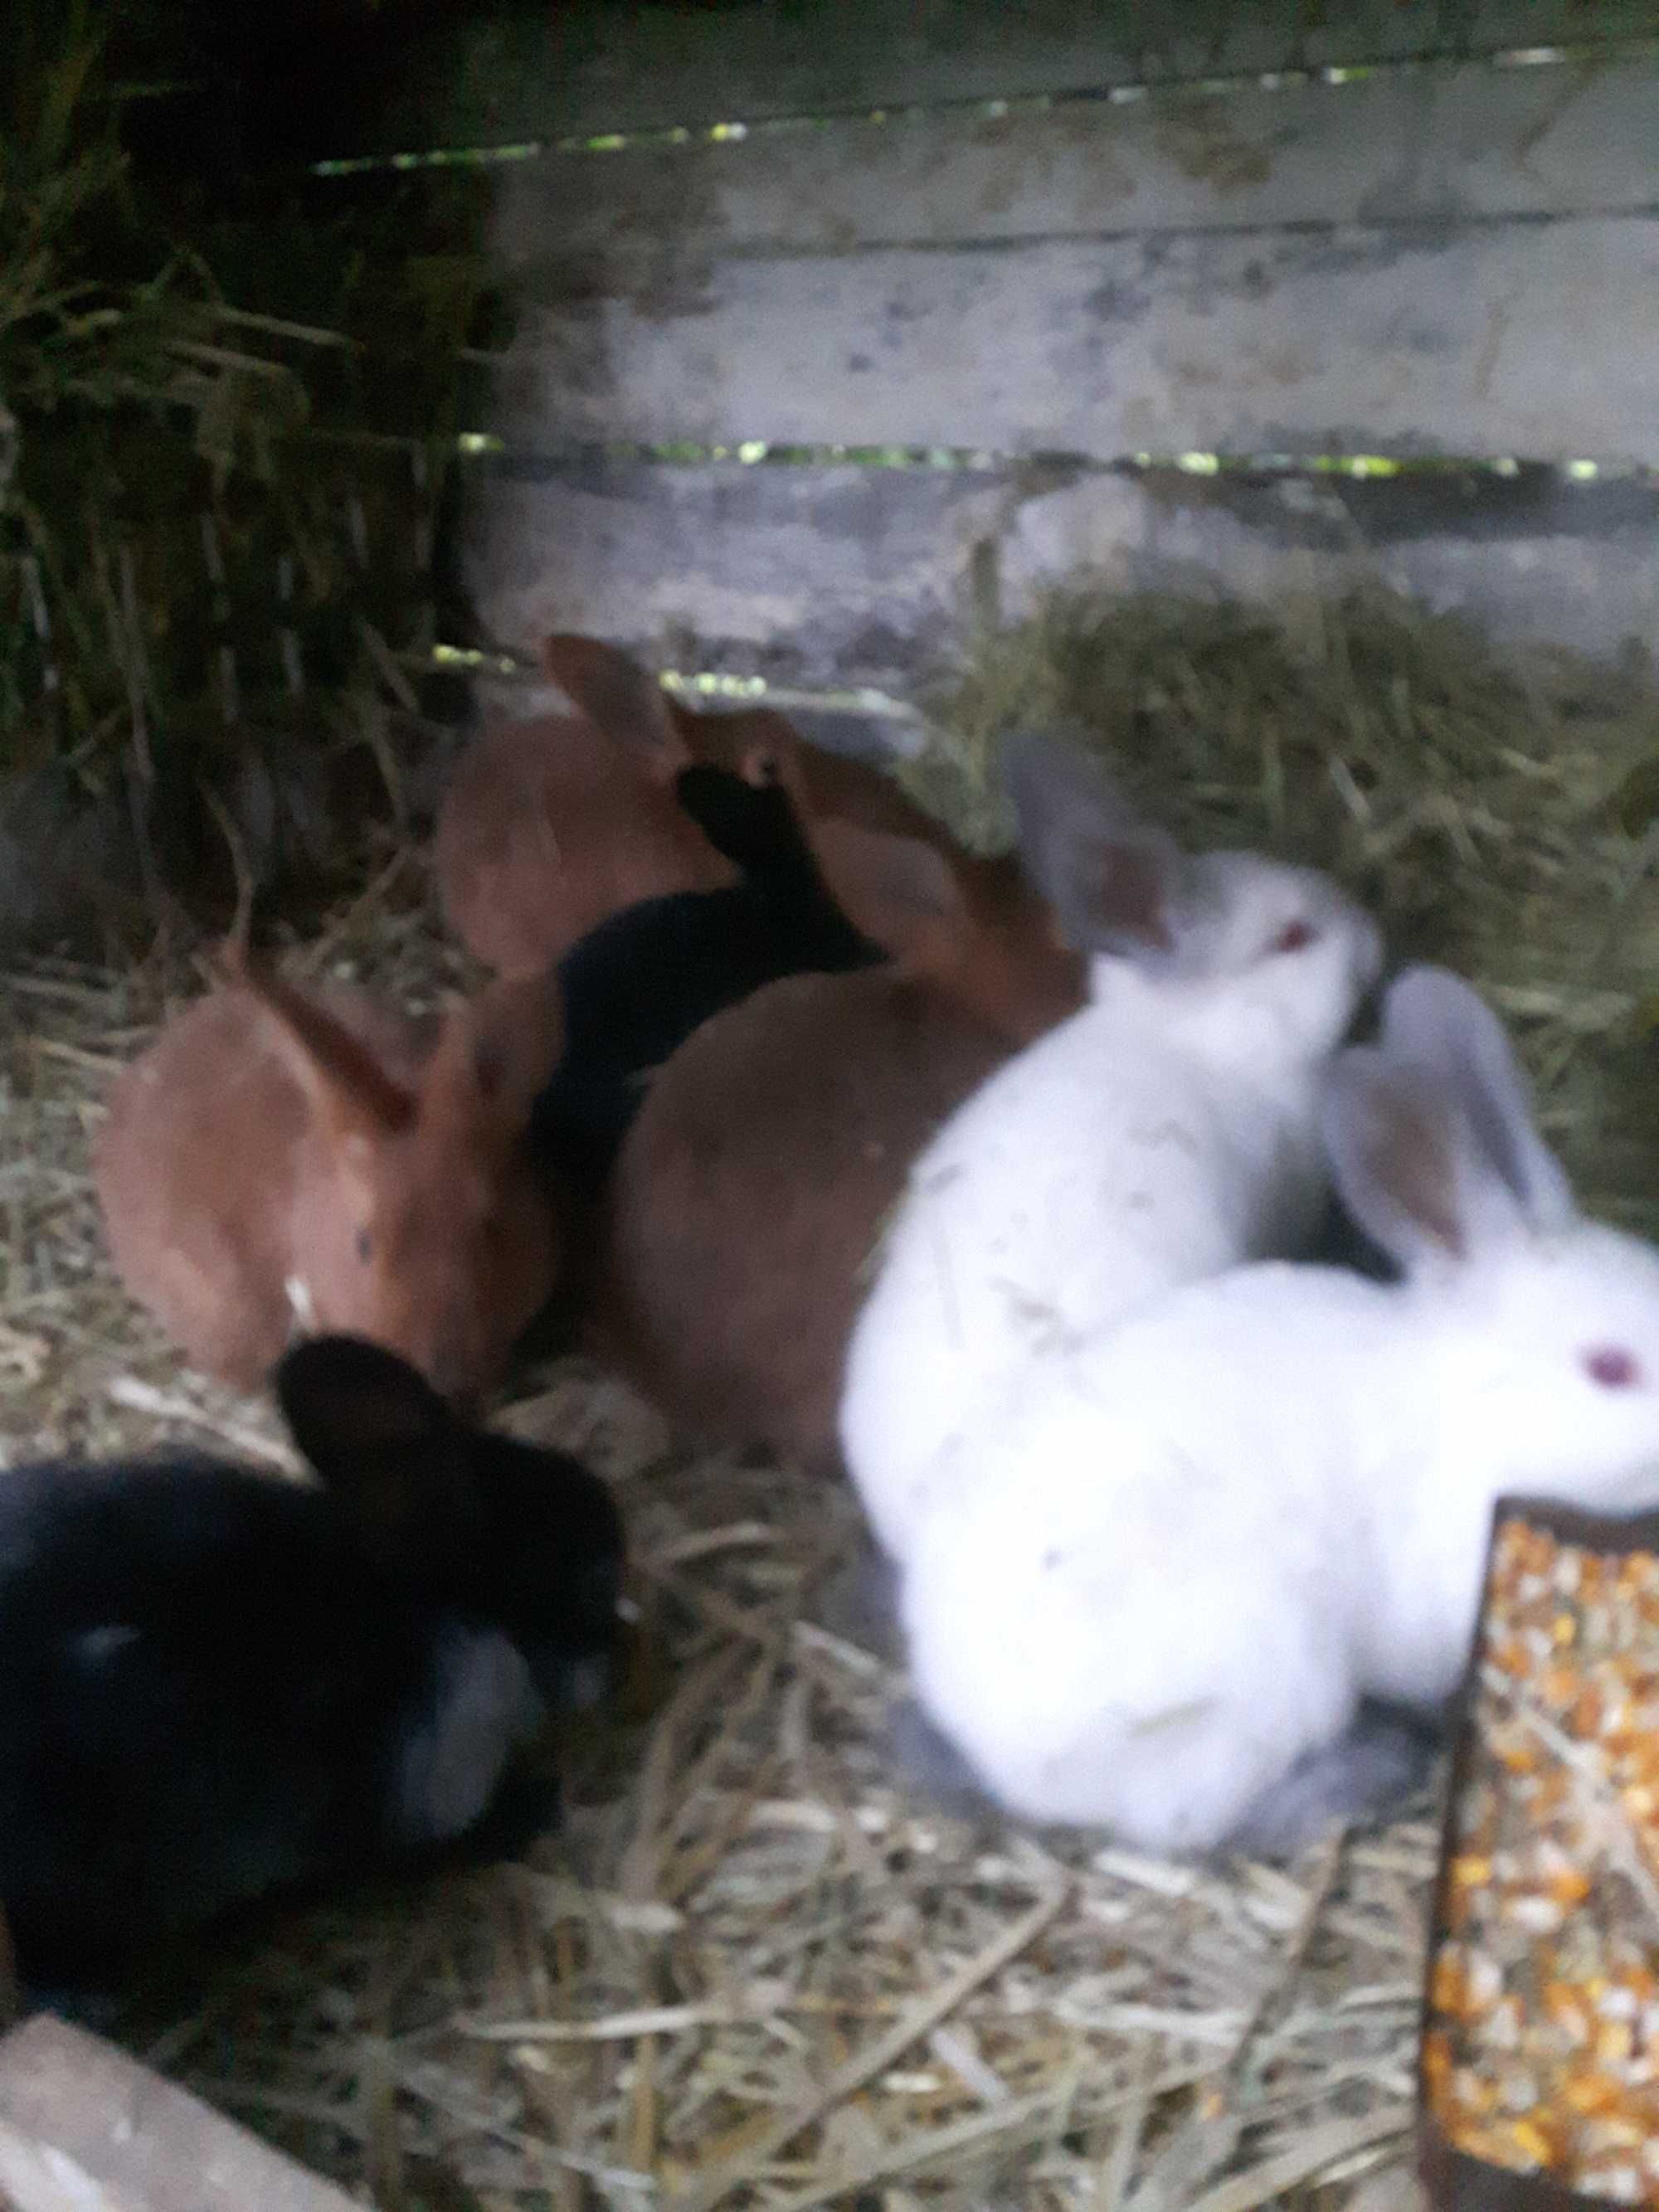 Młode  króliki  różne razy